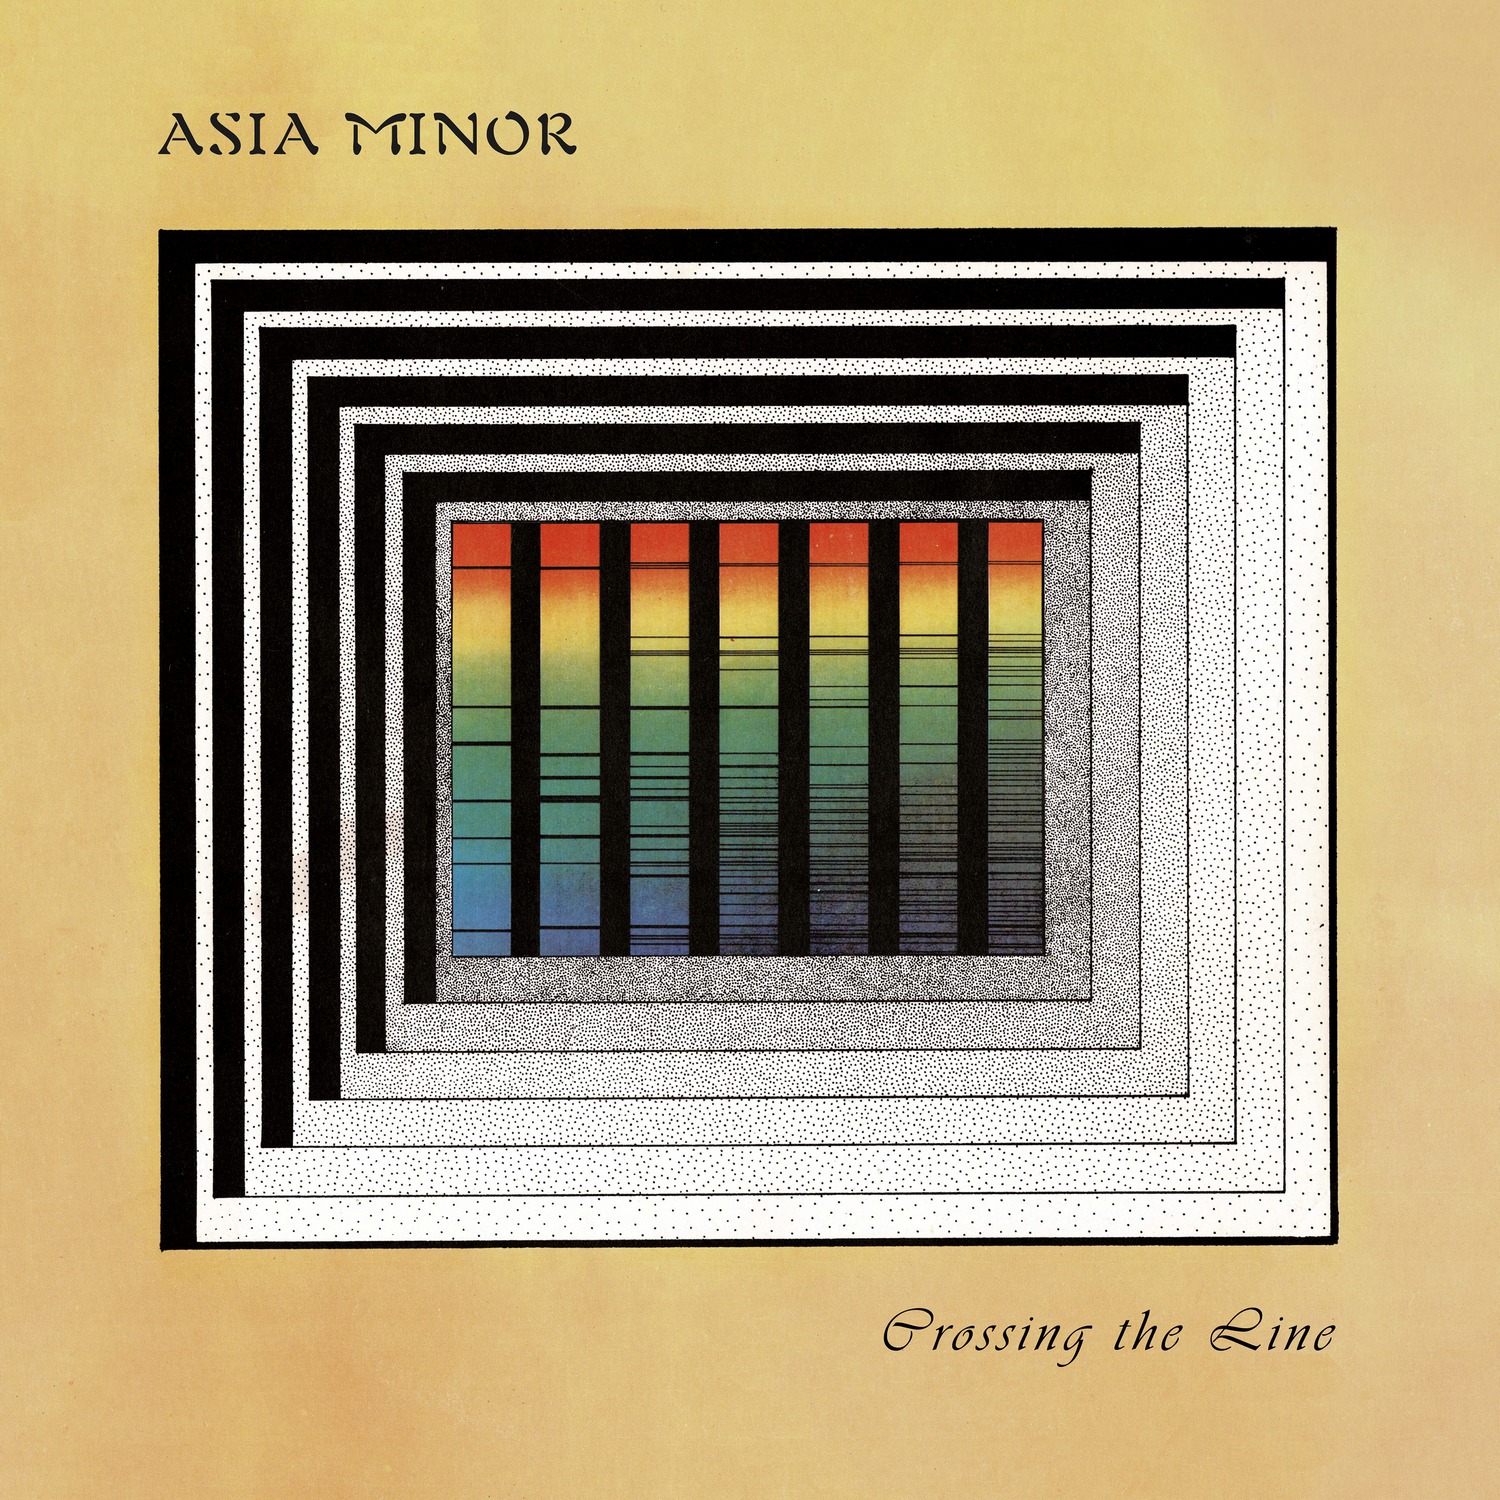 ASIA MINOR – reissue first album via AMS Records